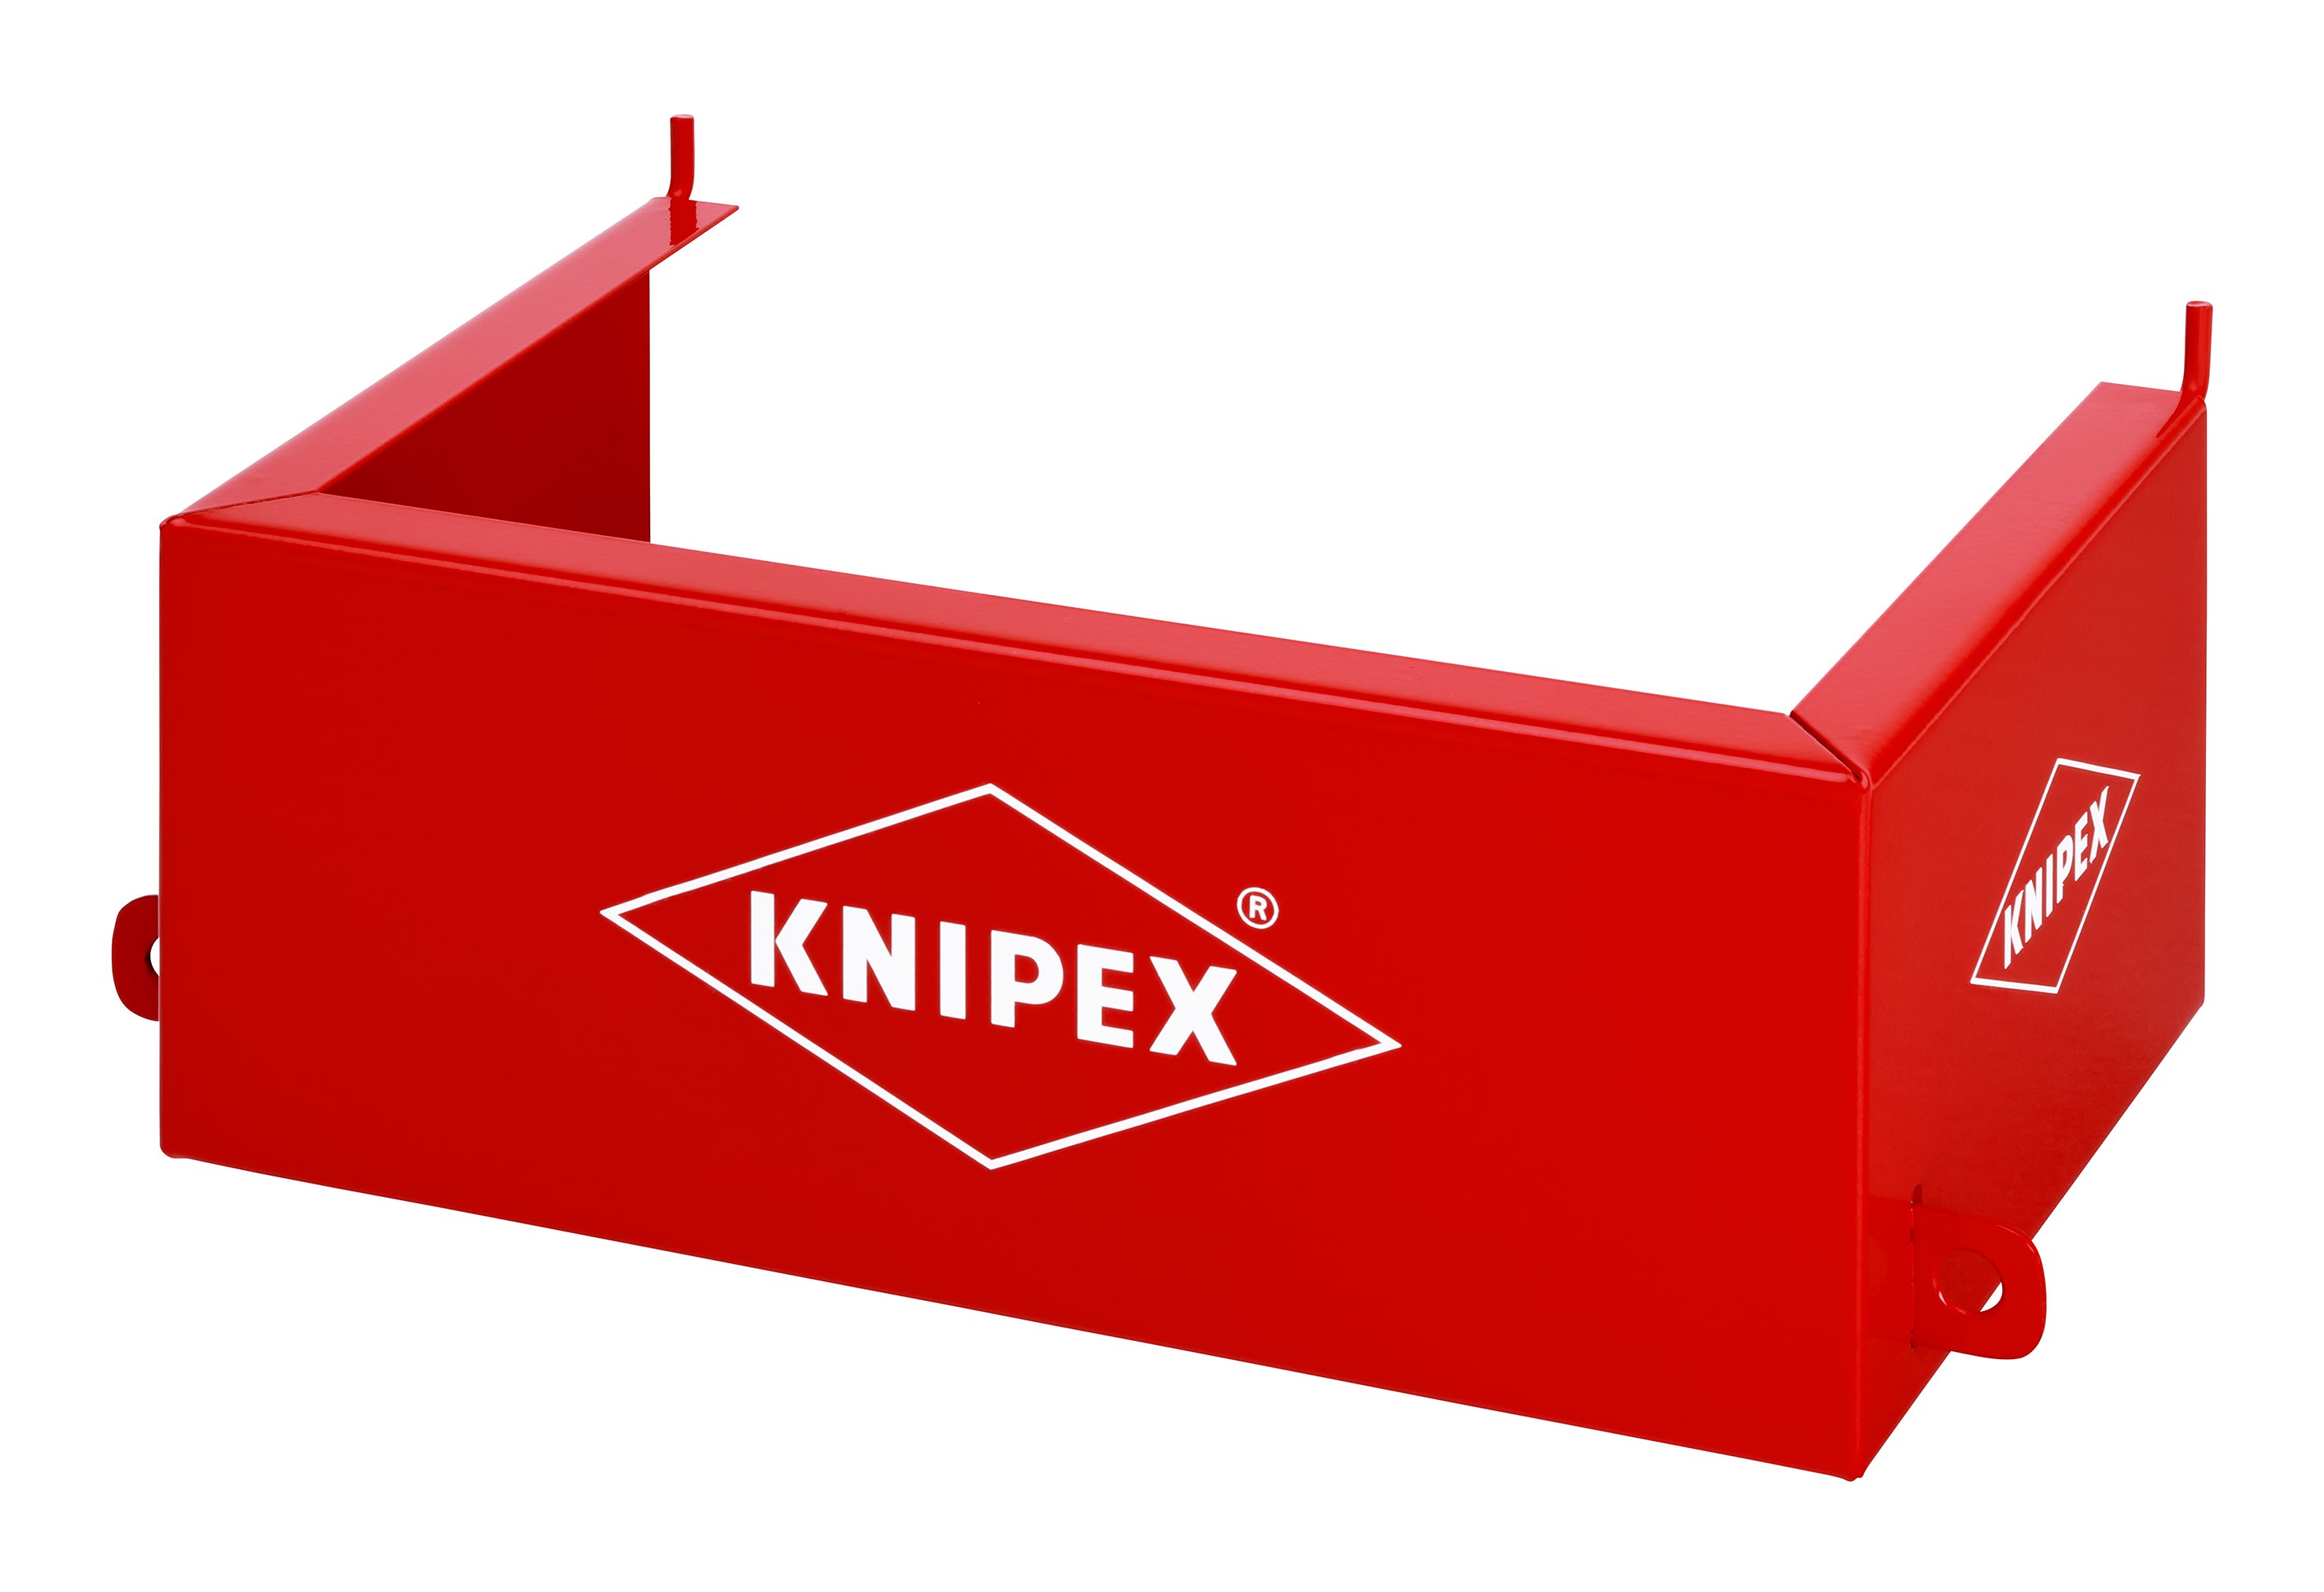 KNIPEX - Presentoir mural vide pour paroi perforee pour presentation gamme Antichute